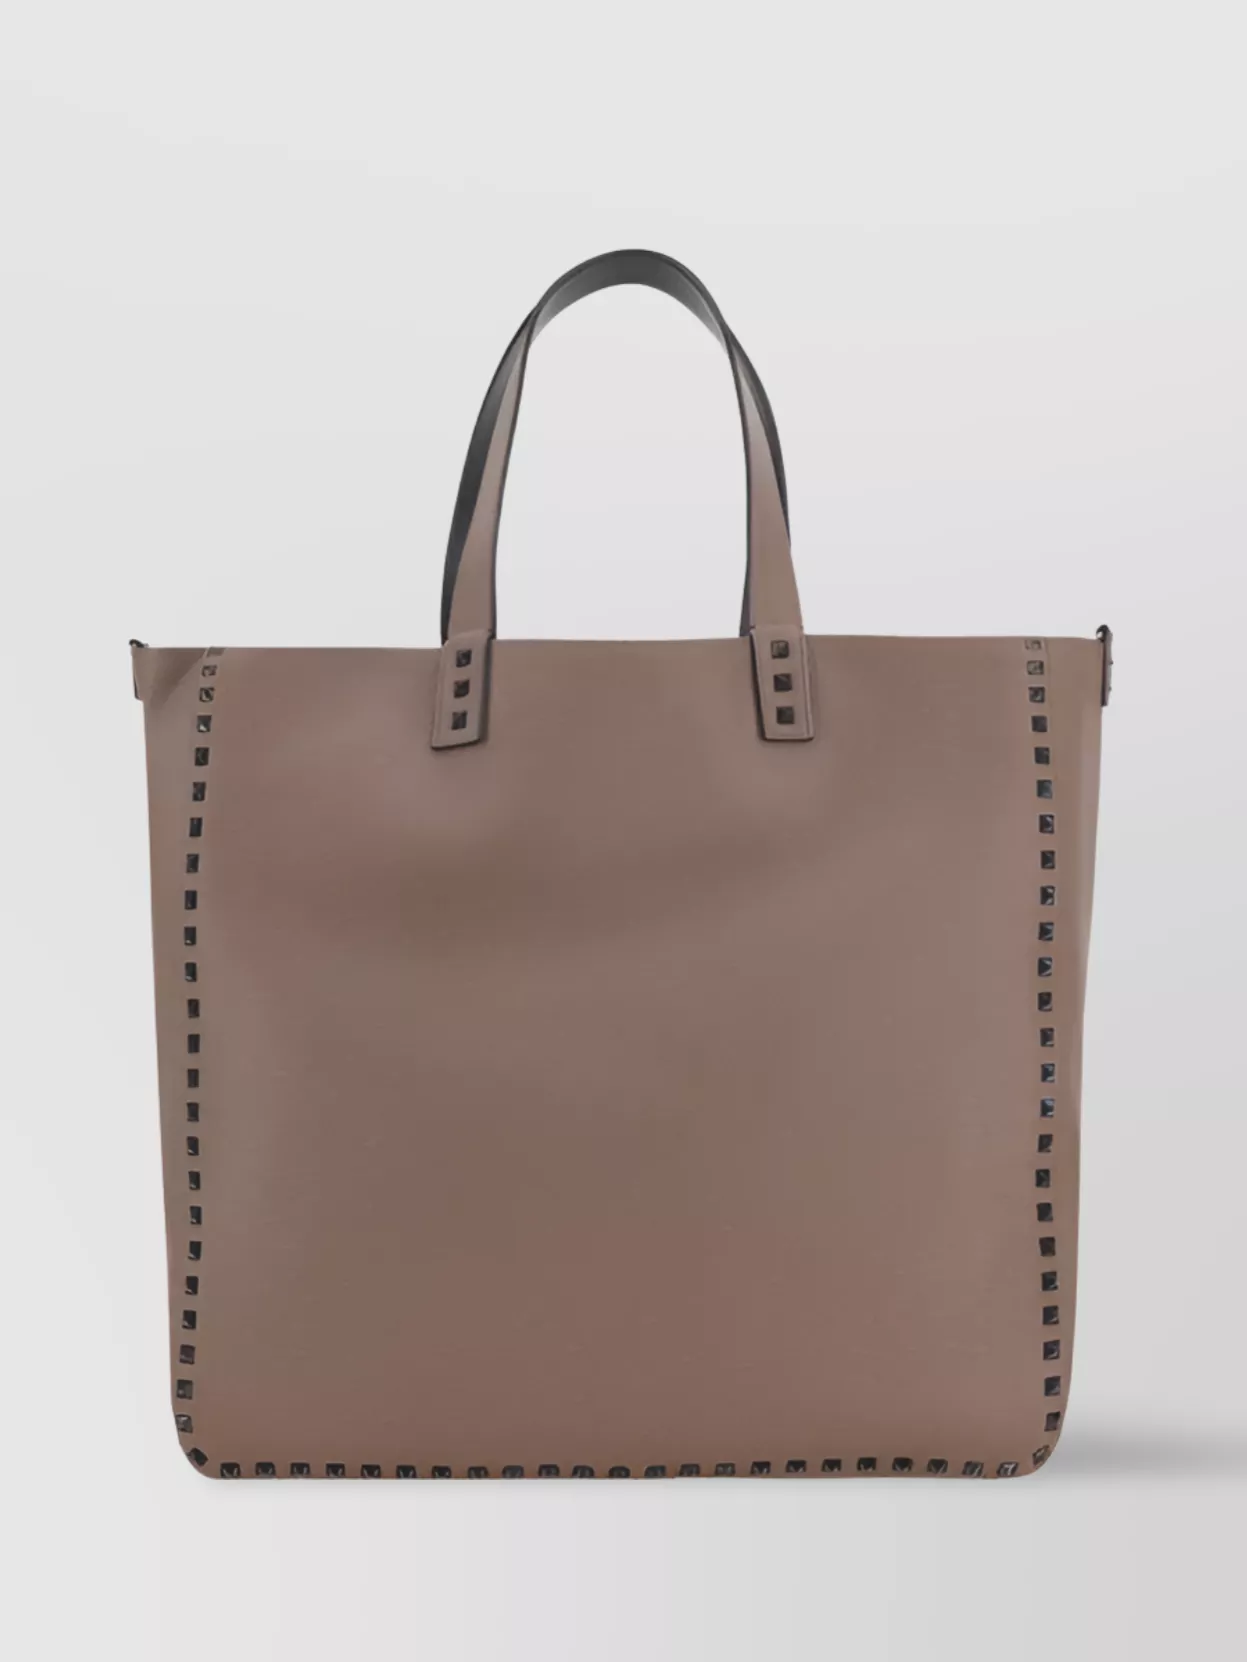 Valentino Garavani Rockstud Grained Leather Tote Bag